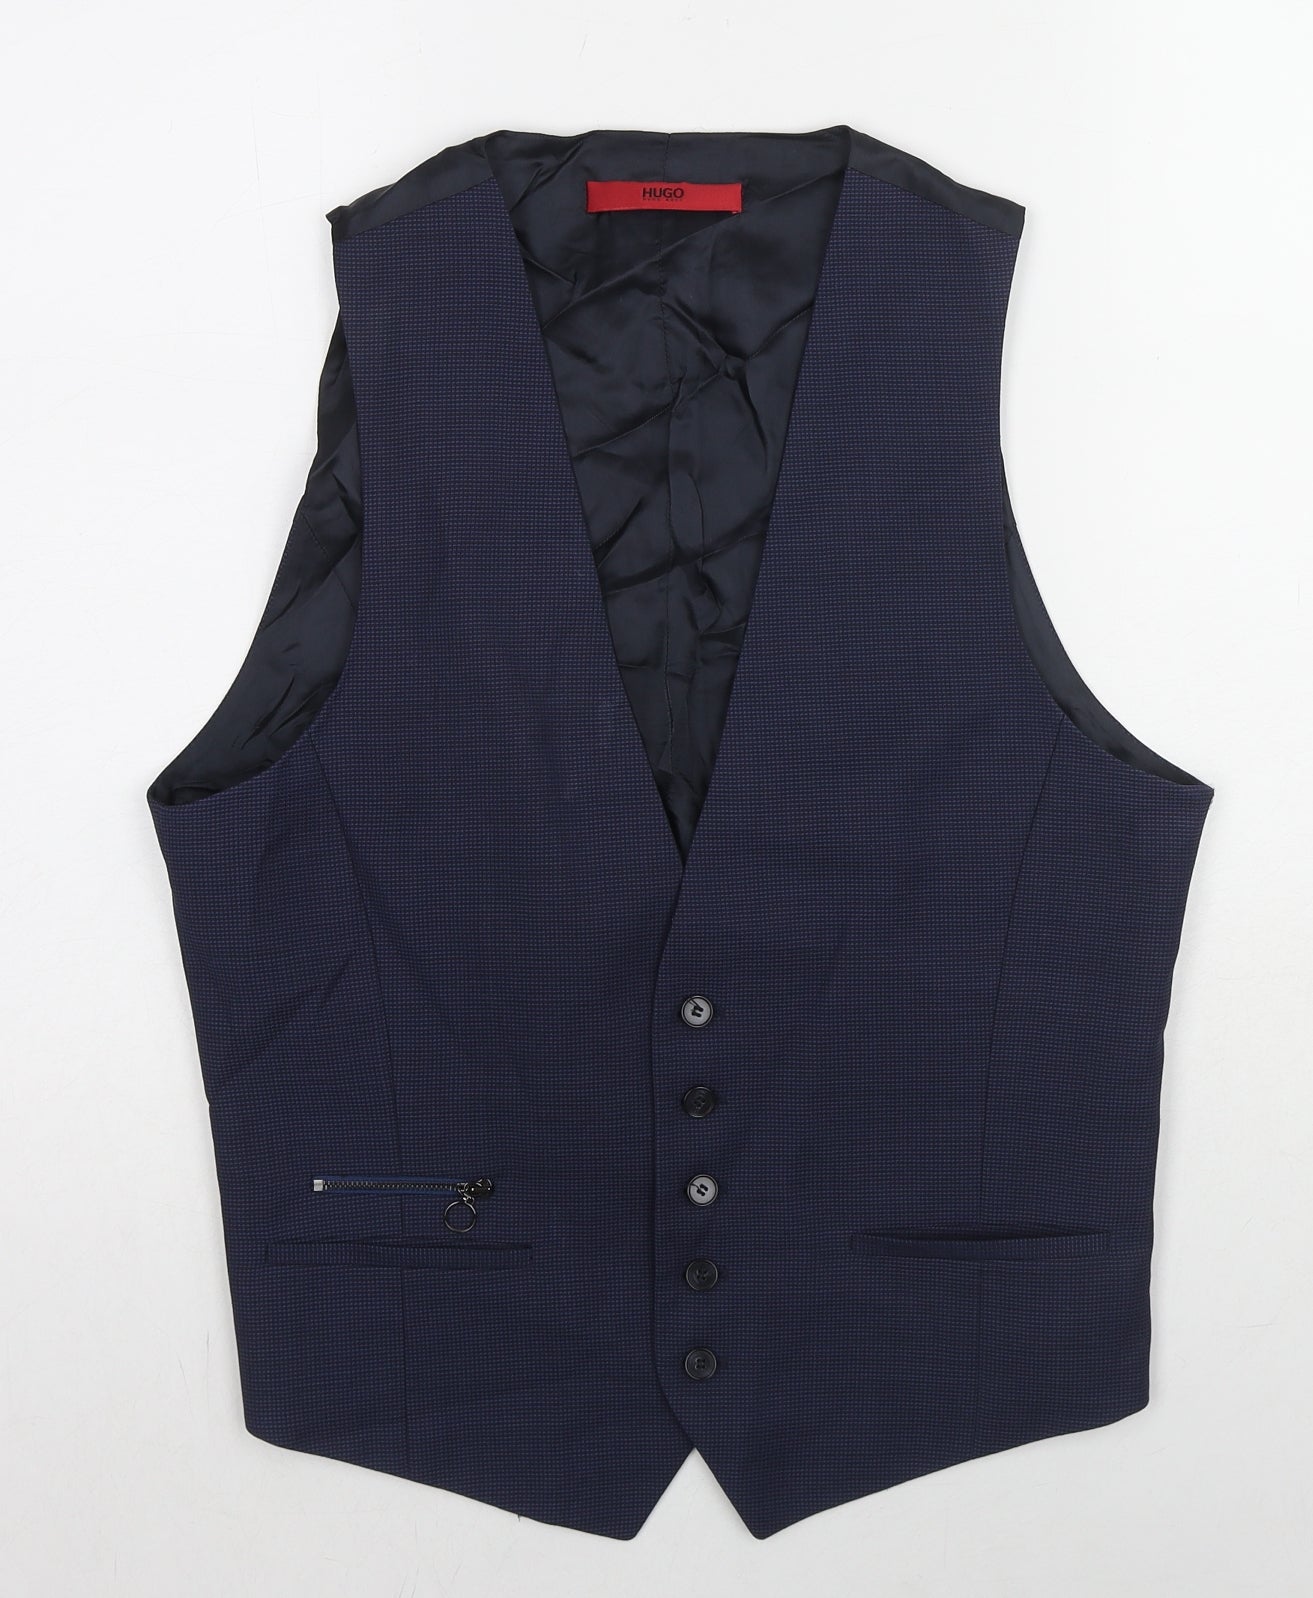 HUGO BOSS Mens Blue Wool Jacket Suit Waistcoat Size 38 Regular - Zip Pocket